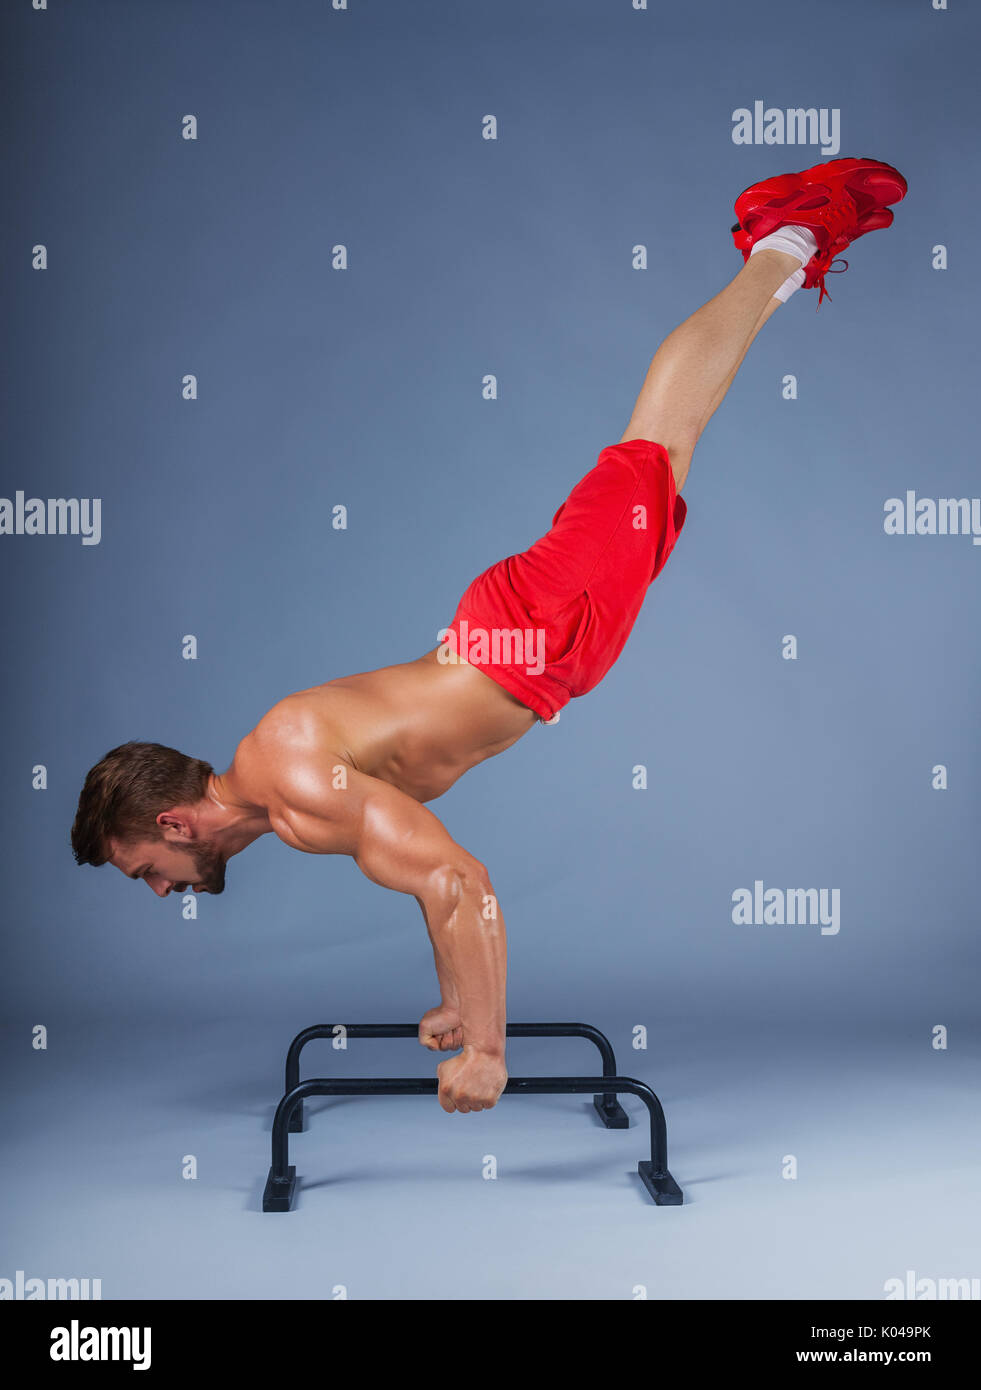 Atleta Masculino fuerte muestra calisthenic mueve piernas extendidas planche empuje ups en barras paralelas, Foto de estudio Foto de stock